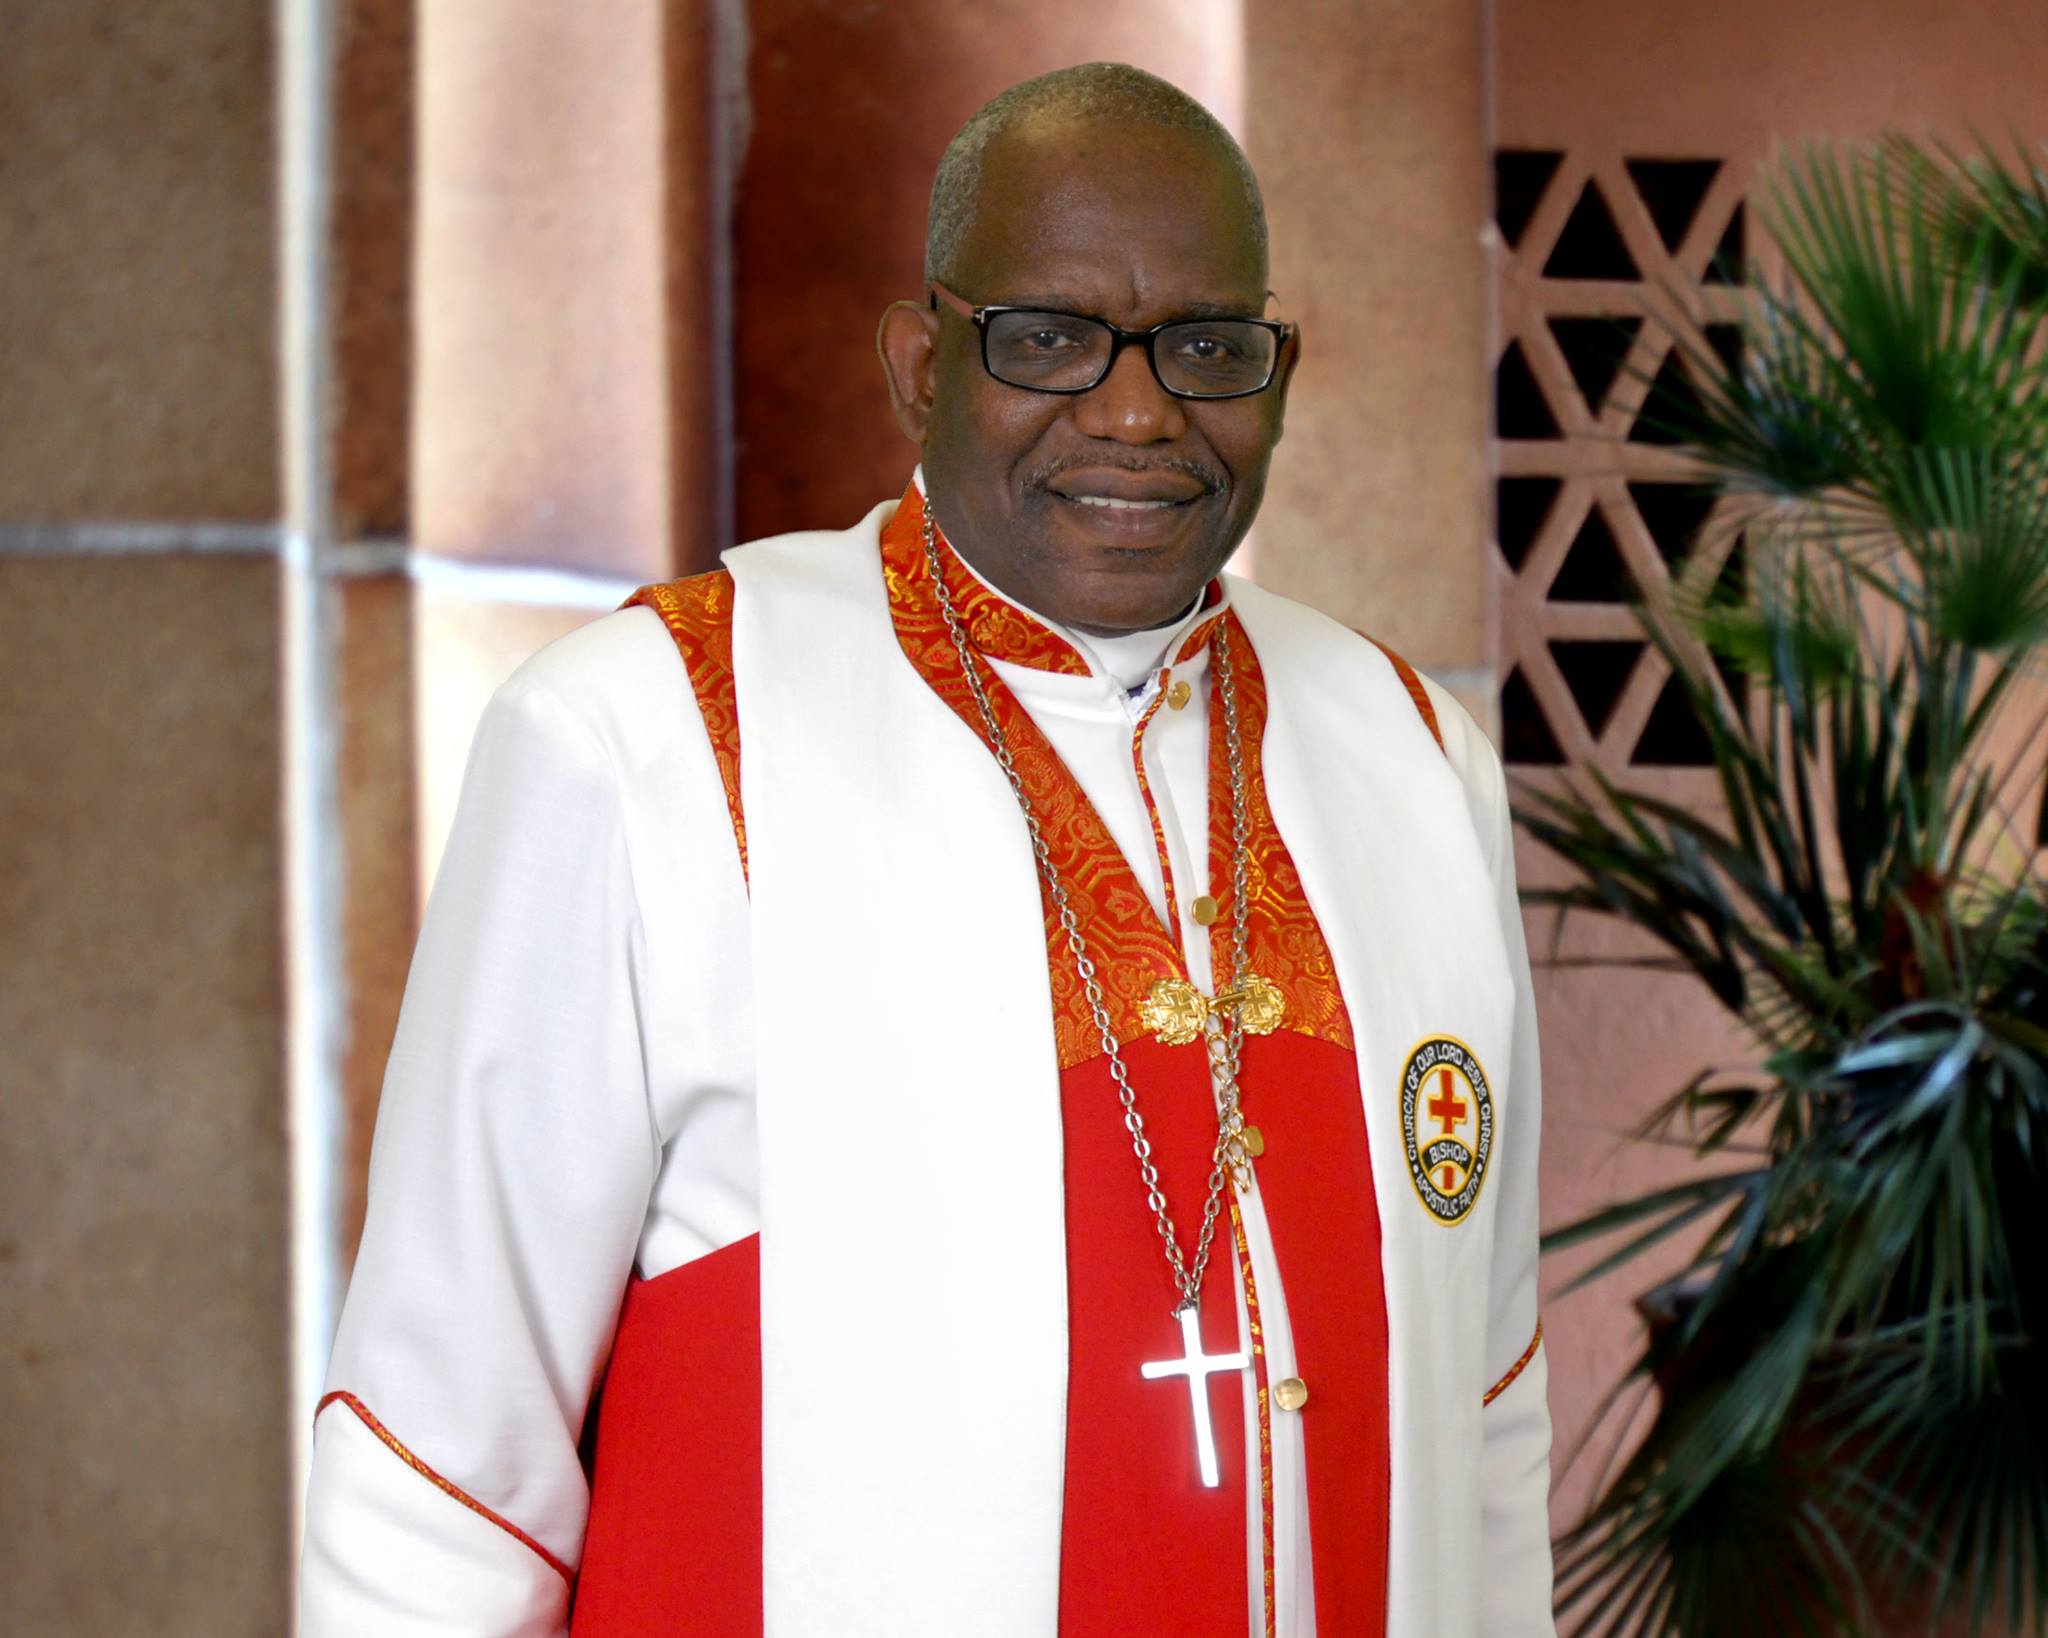 Bishop Michael E. Jackson